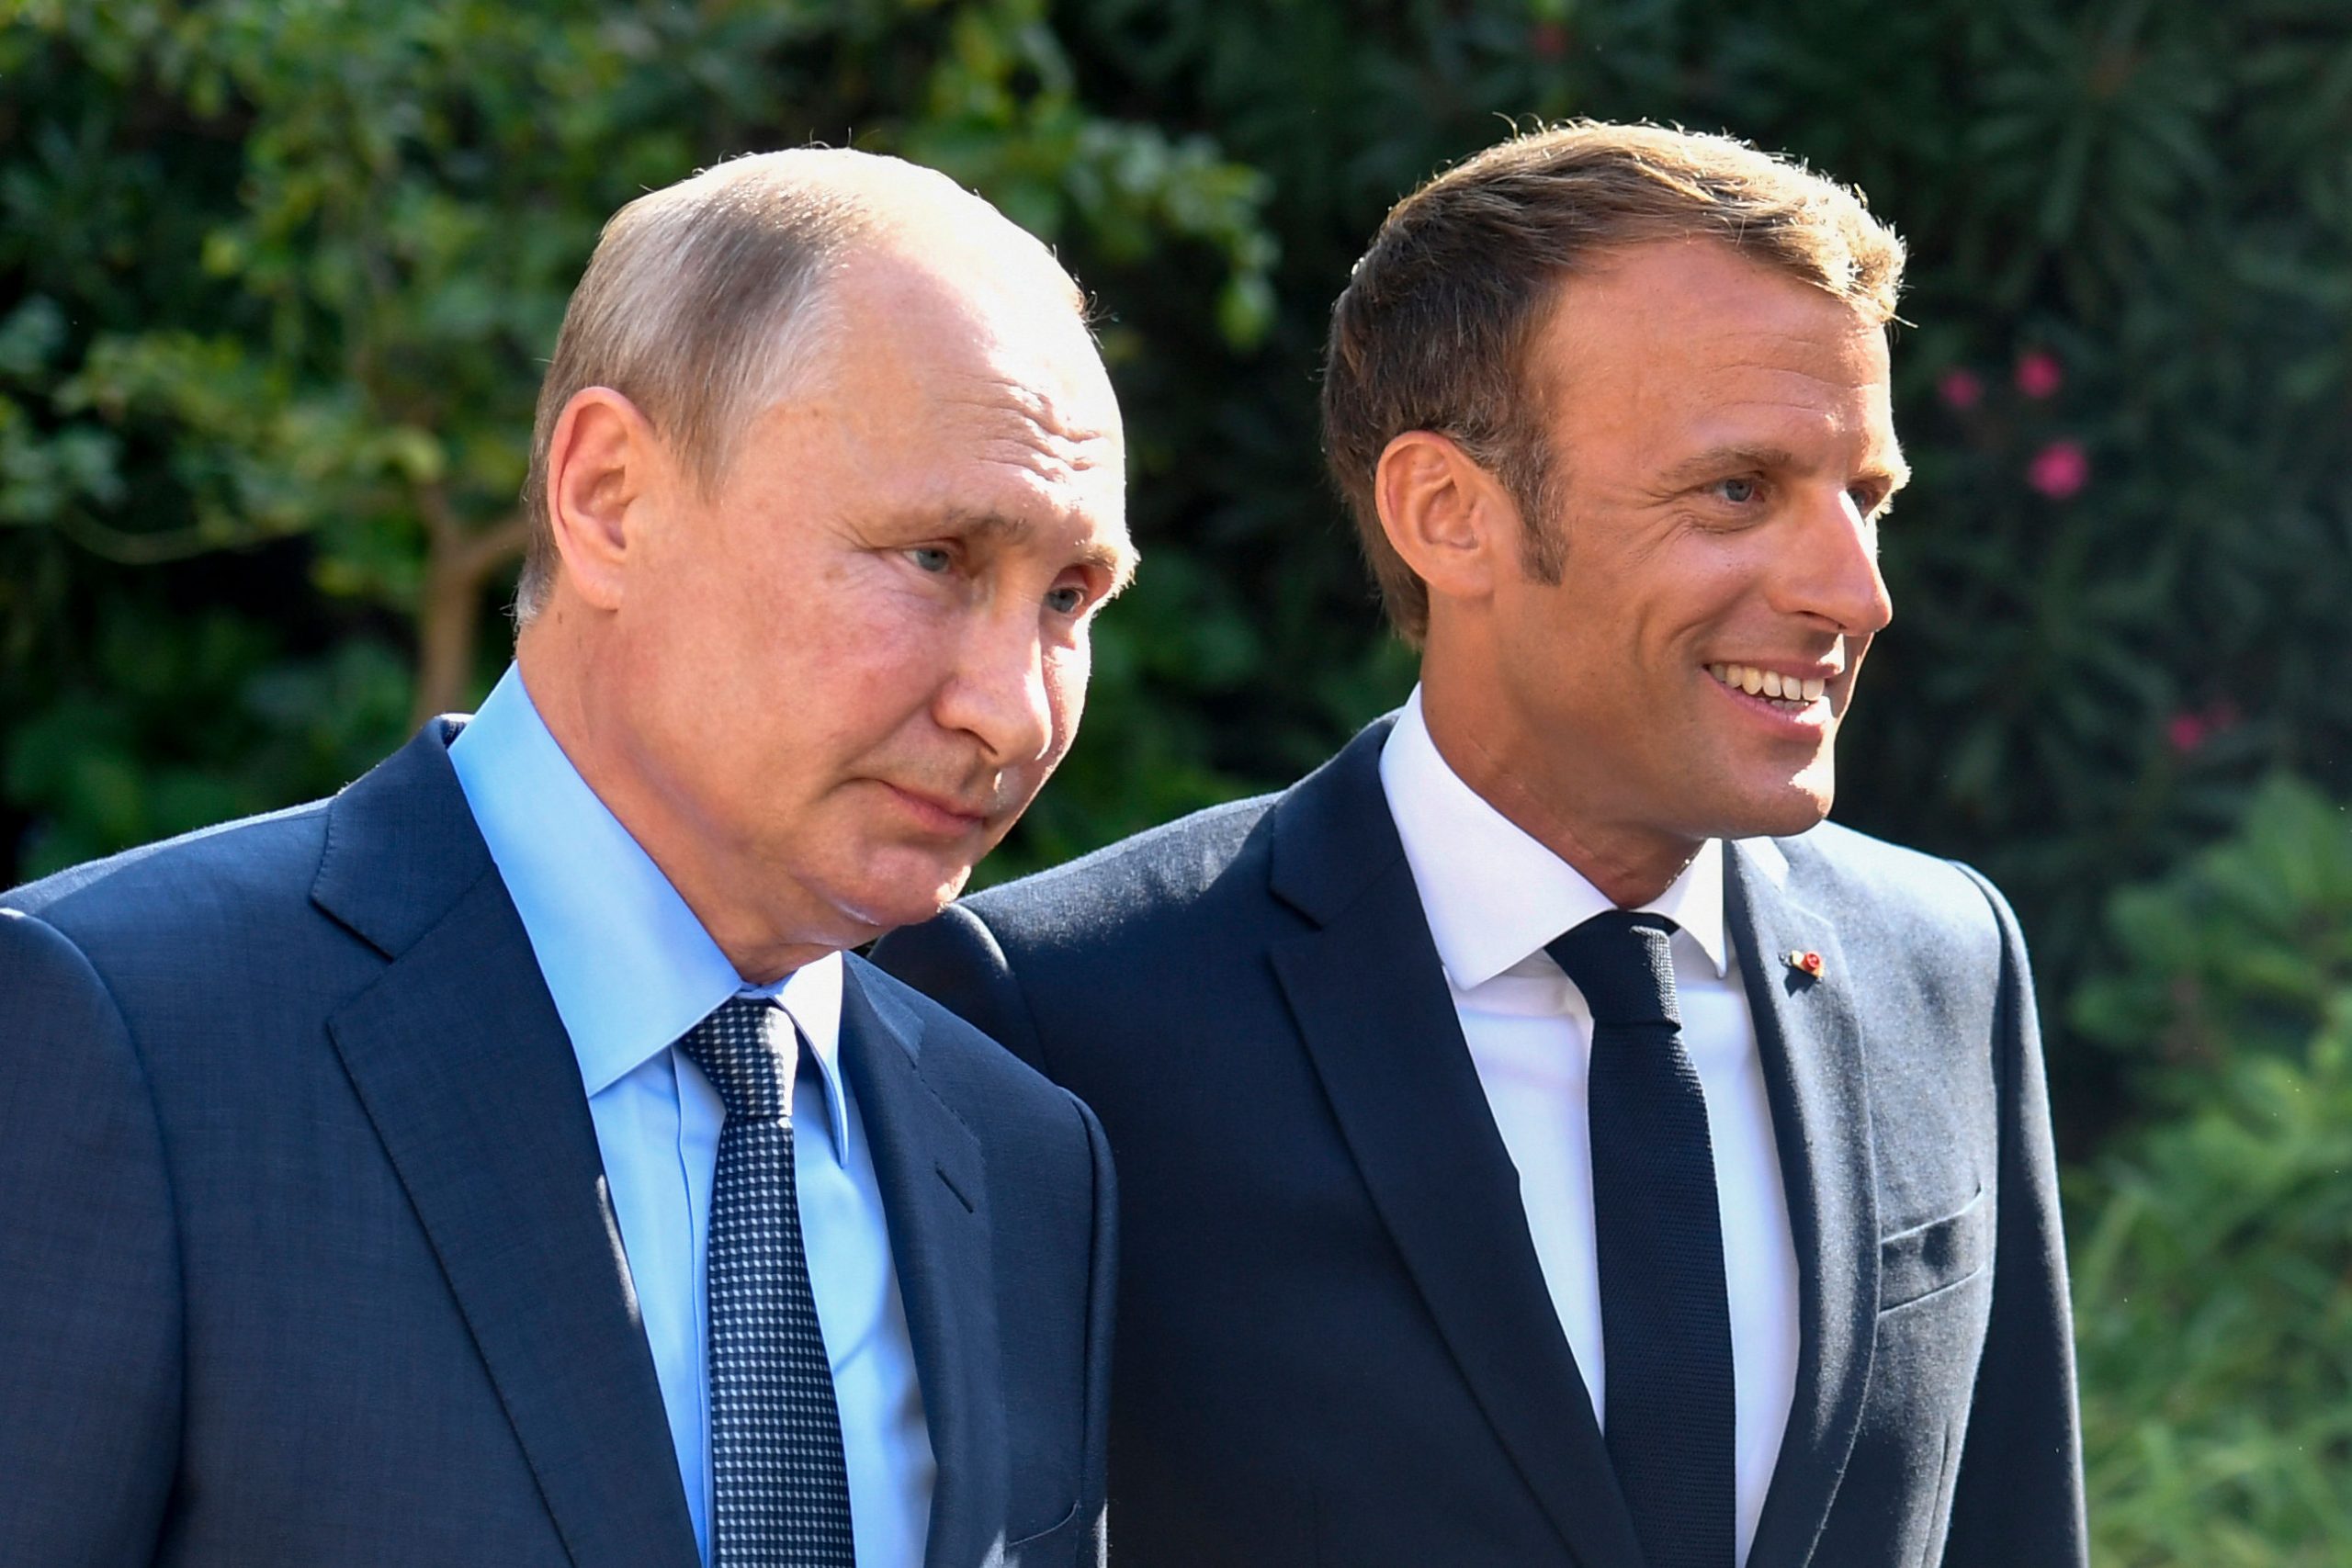 European leaders in Moscow, Washington discuss Ukraine crisis